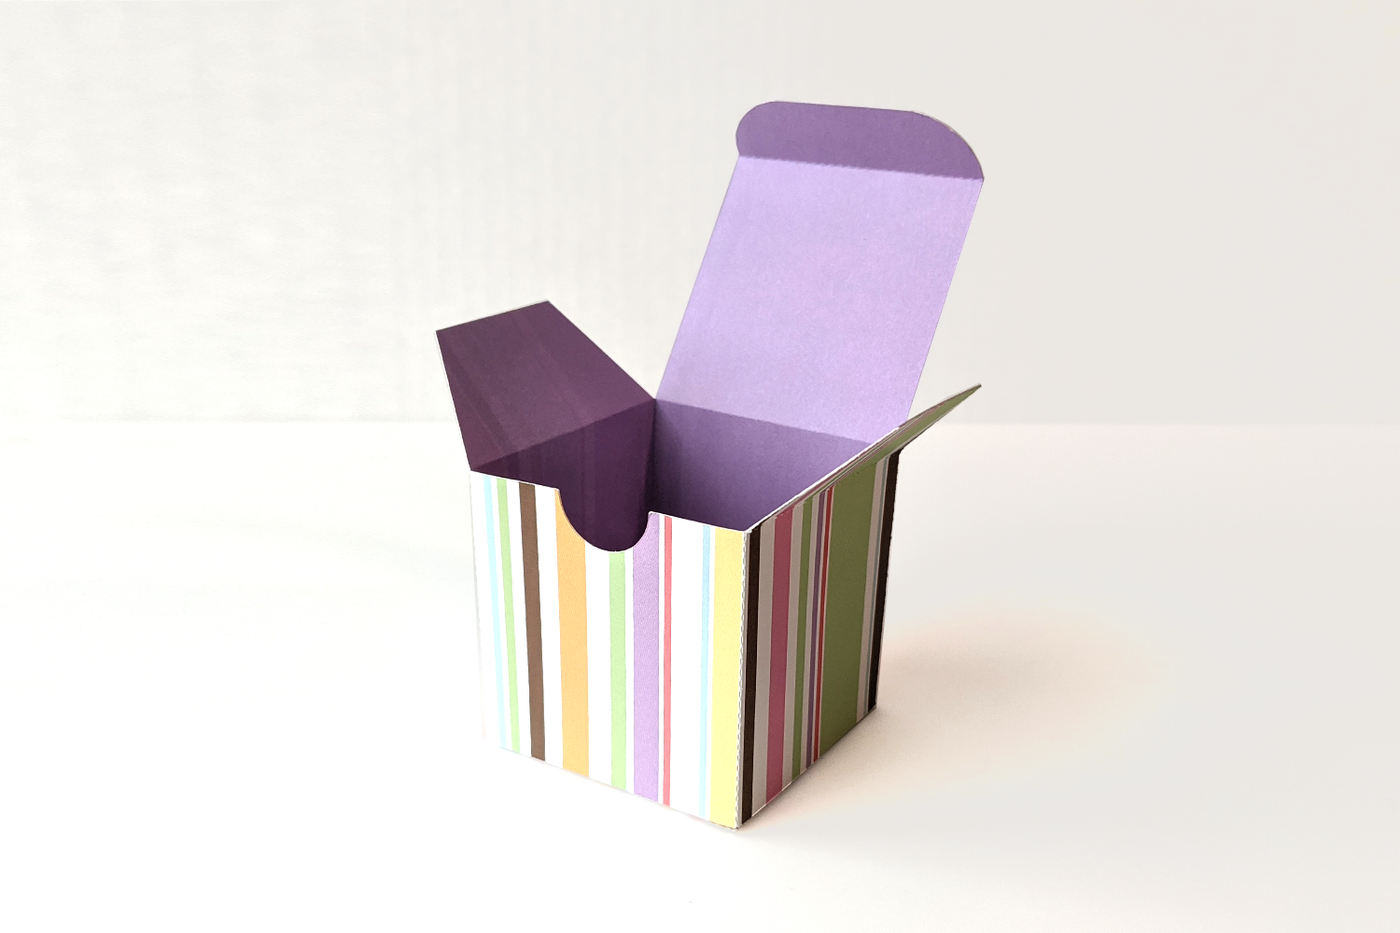 Cube gift box SVG design